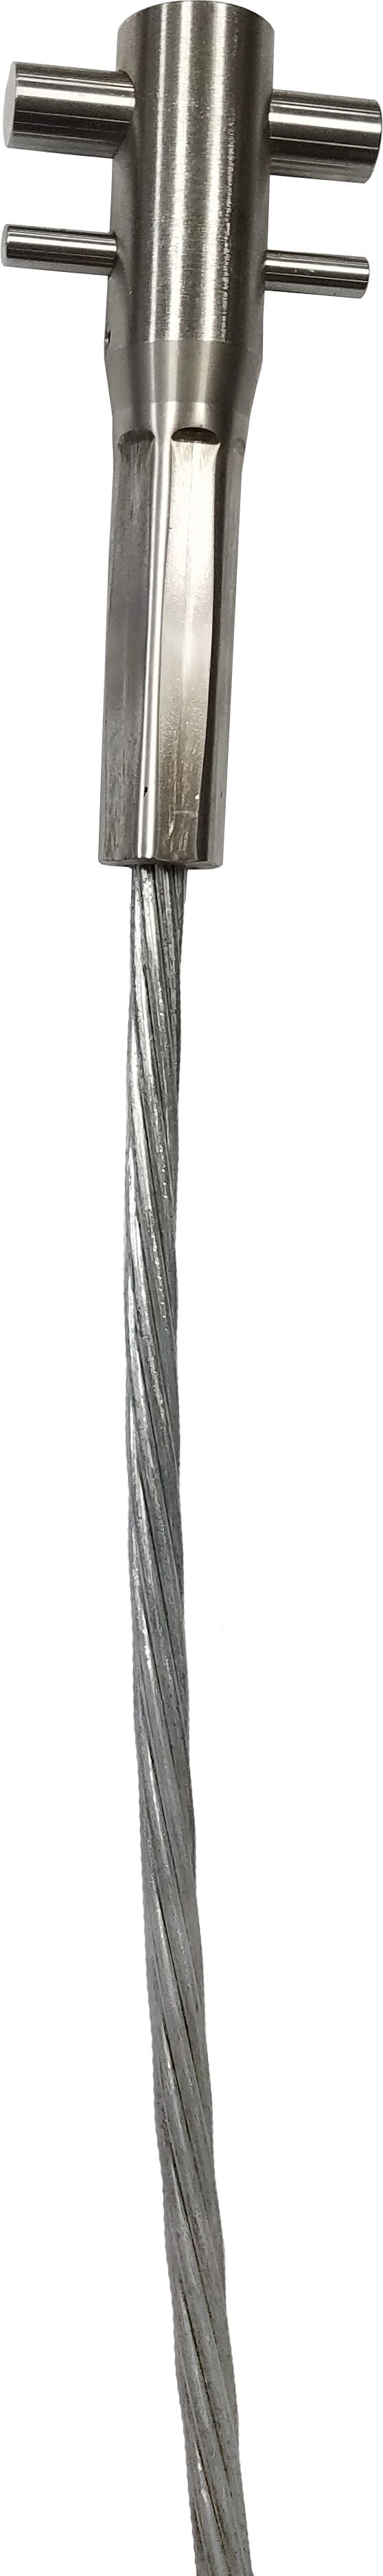 3M™ DBI-SALA® Lad-Saf™ Swaged Cable 6115004, 3/8 Inch, Galvanized Steel, 12m